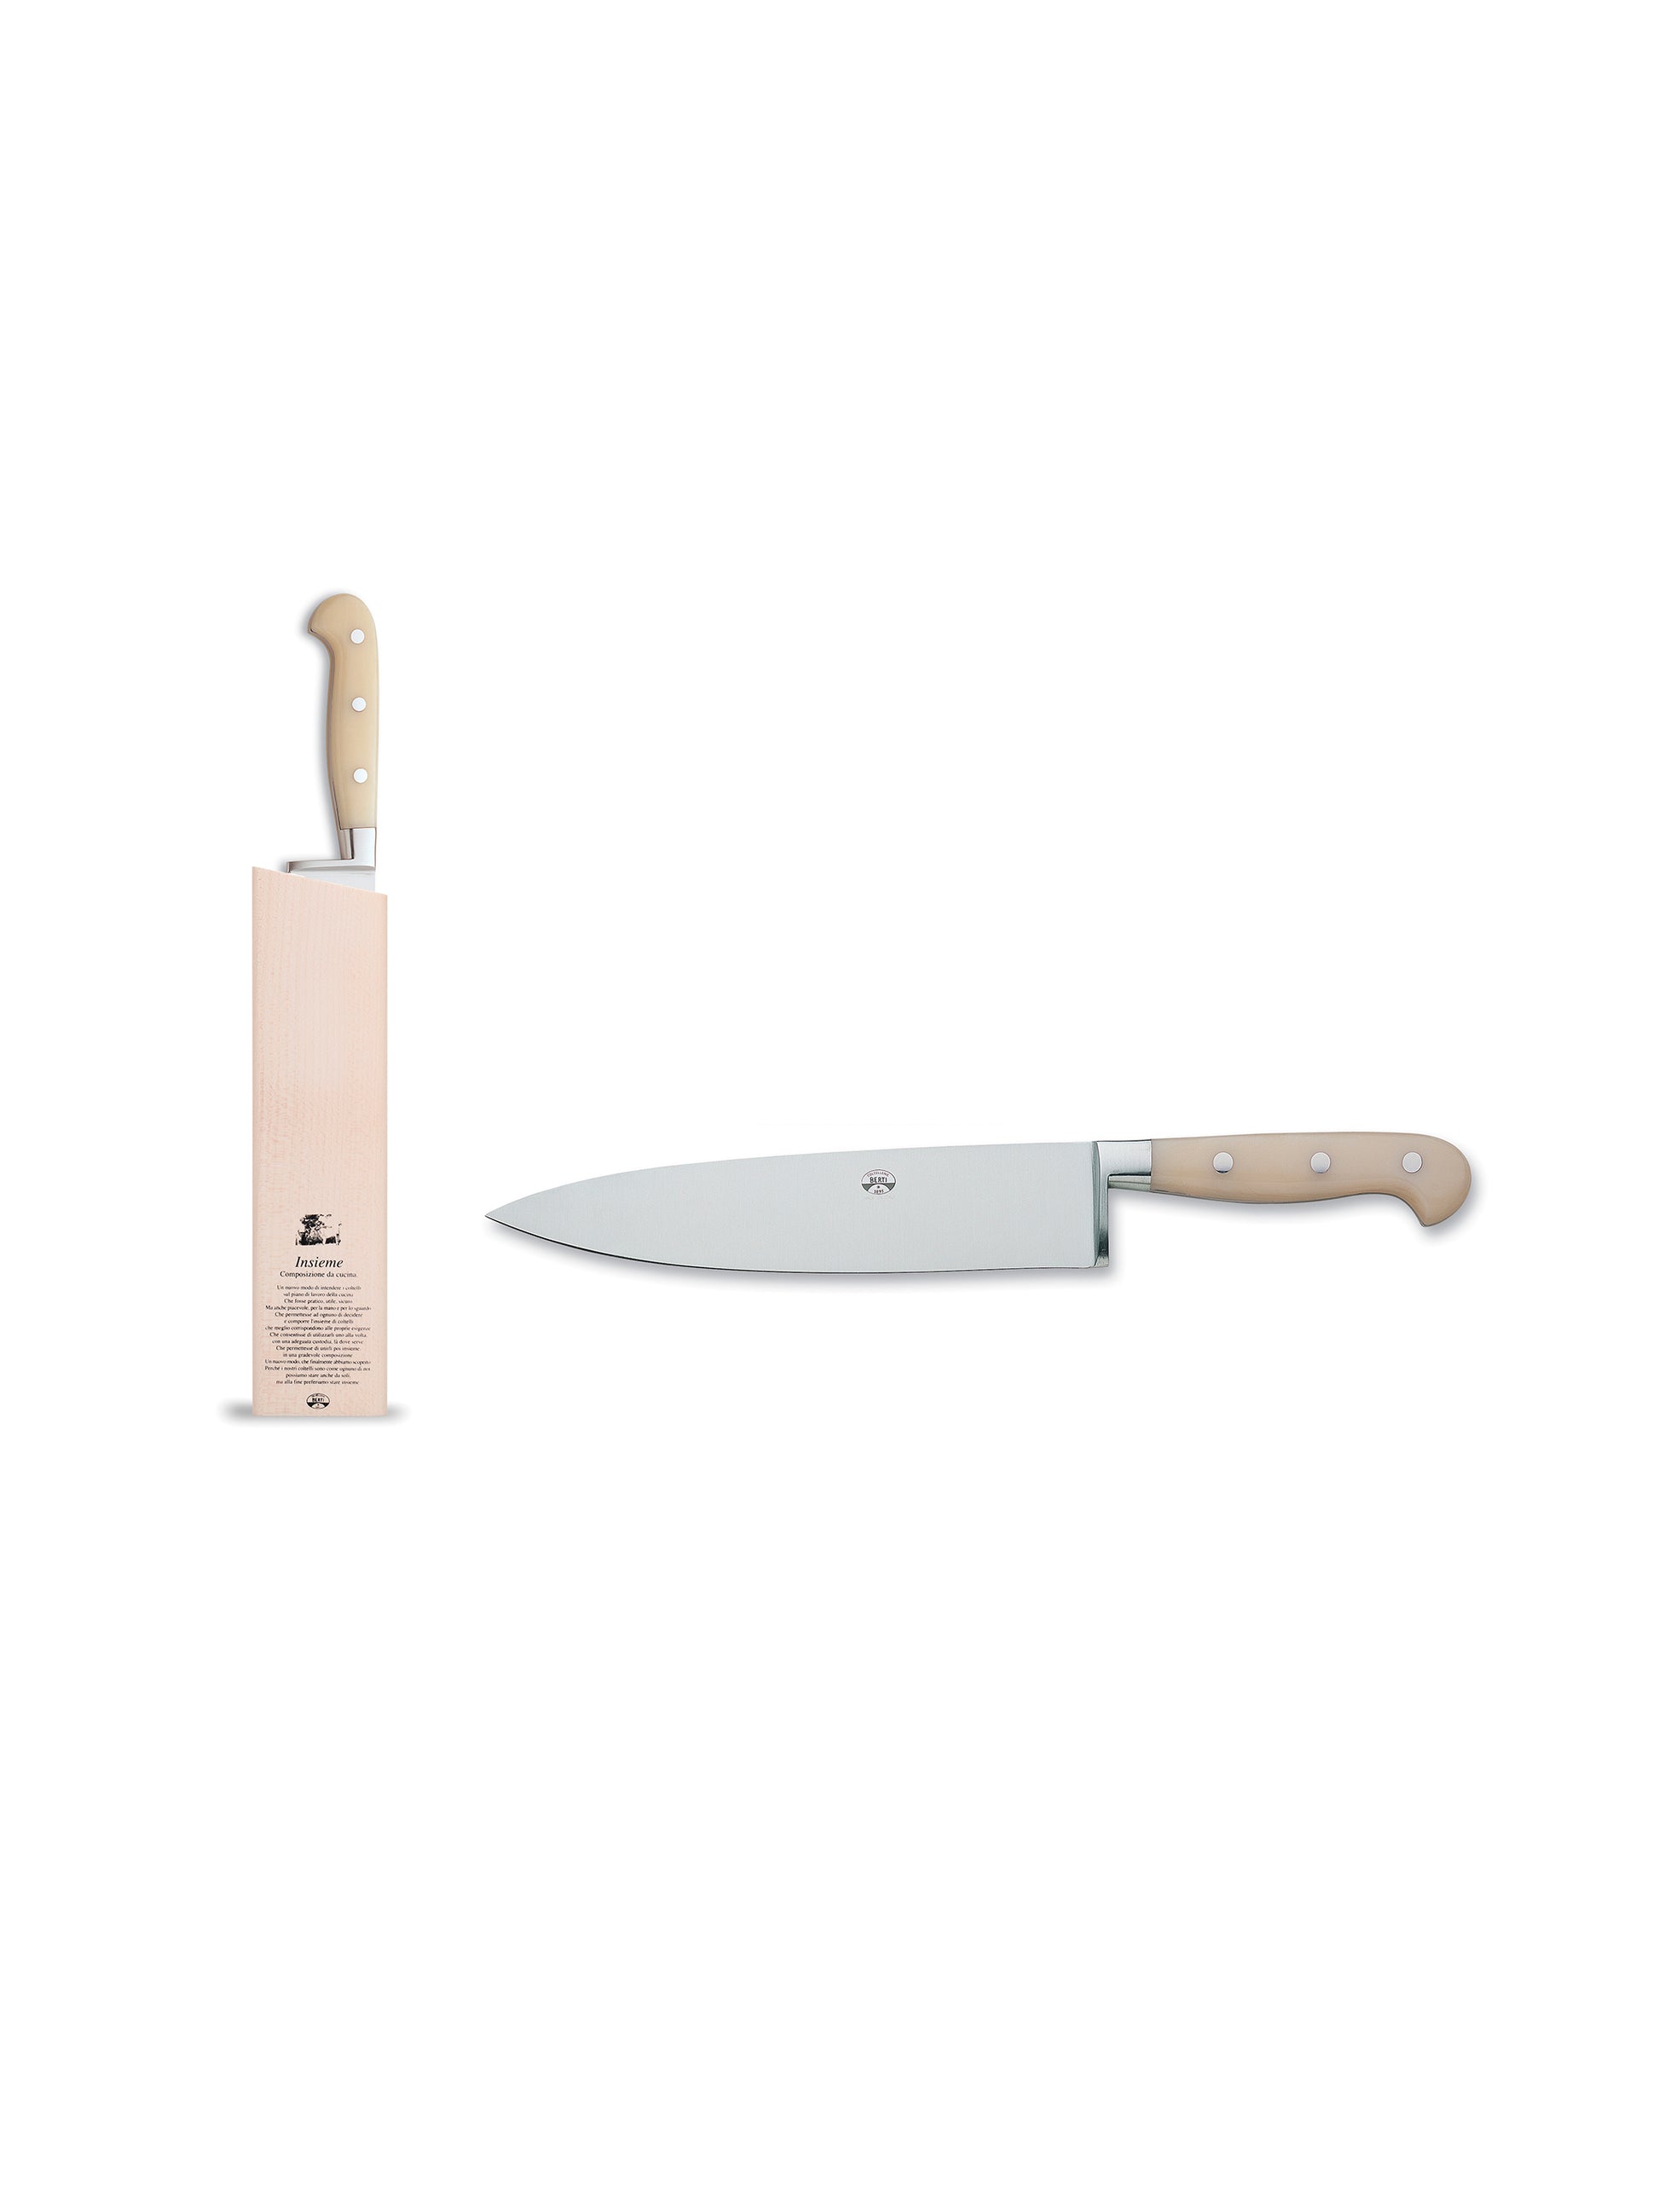 Berti Insieme Modern Classic White Lucite Handle Knife Block Set